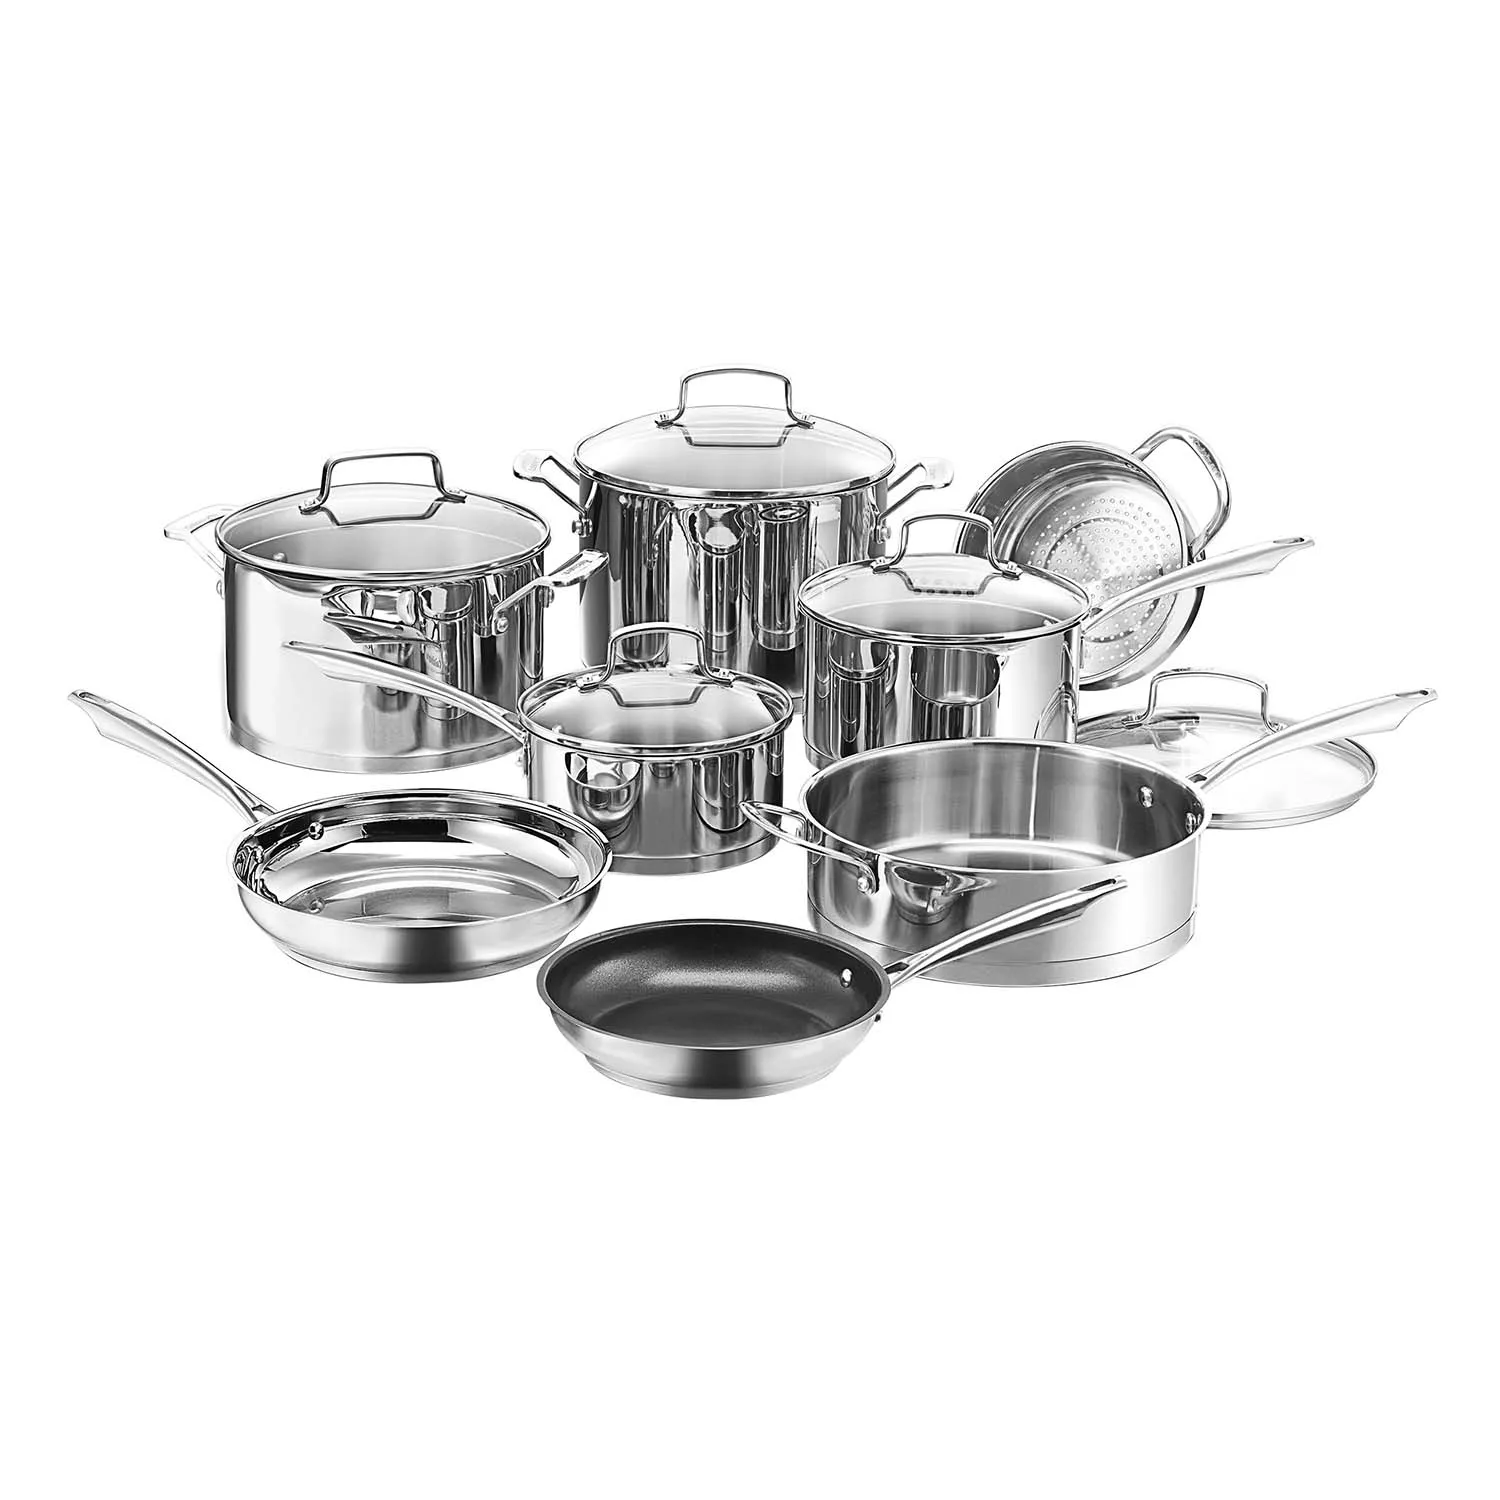 Cuisinart 17-Piece Chefs Classic Stainless Steel Cookware Set